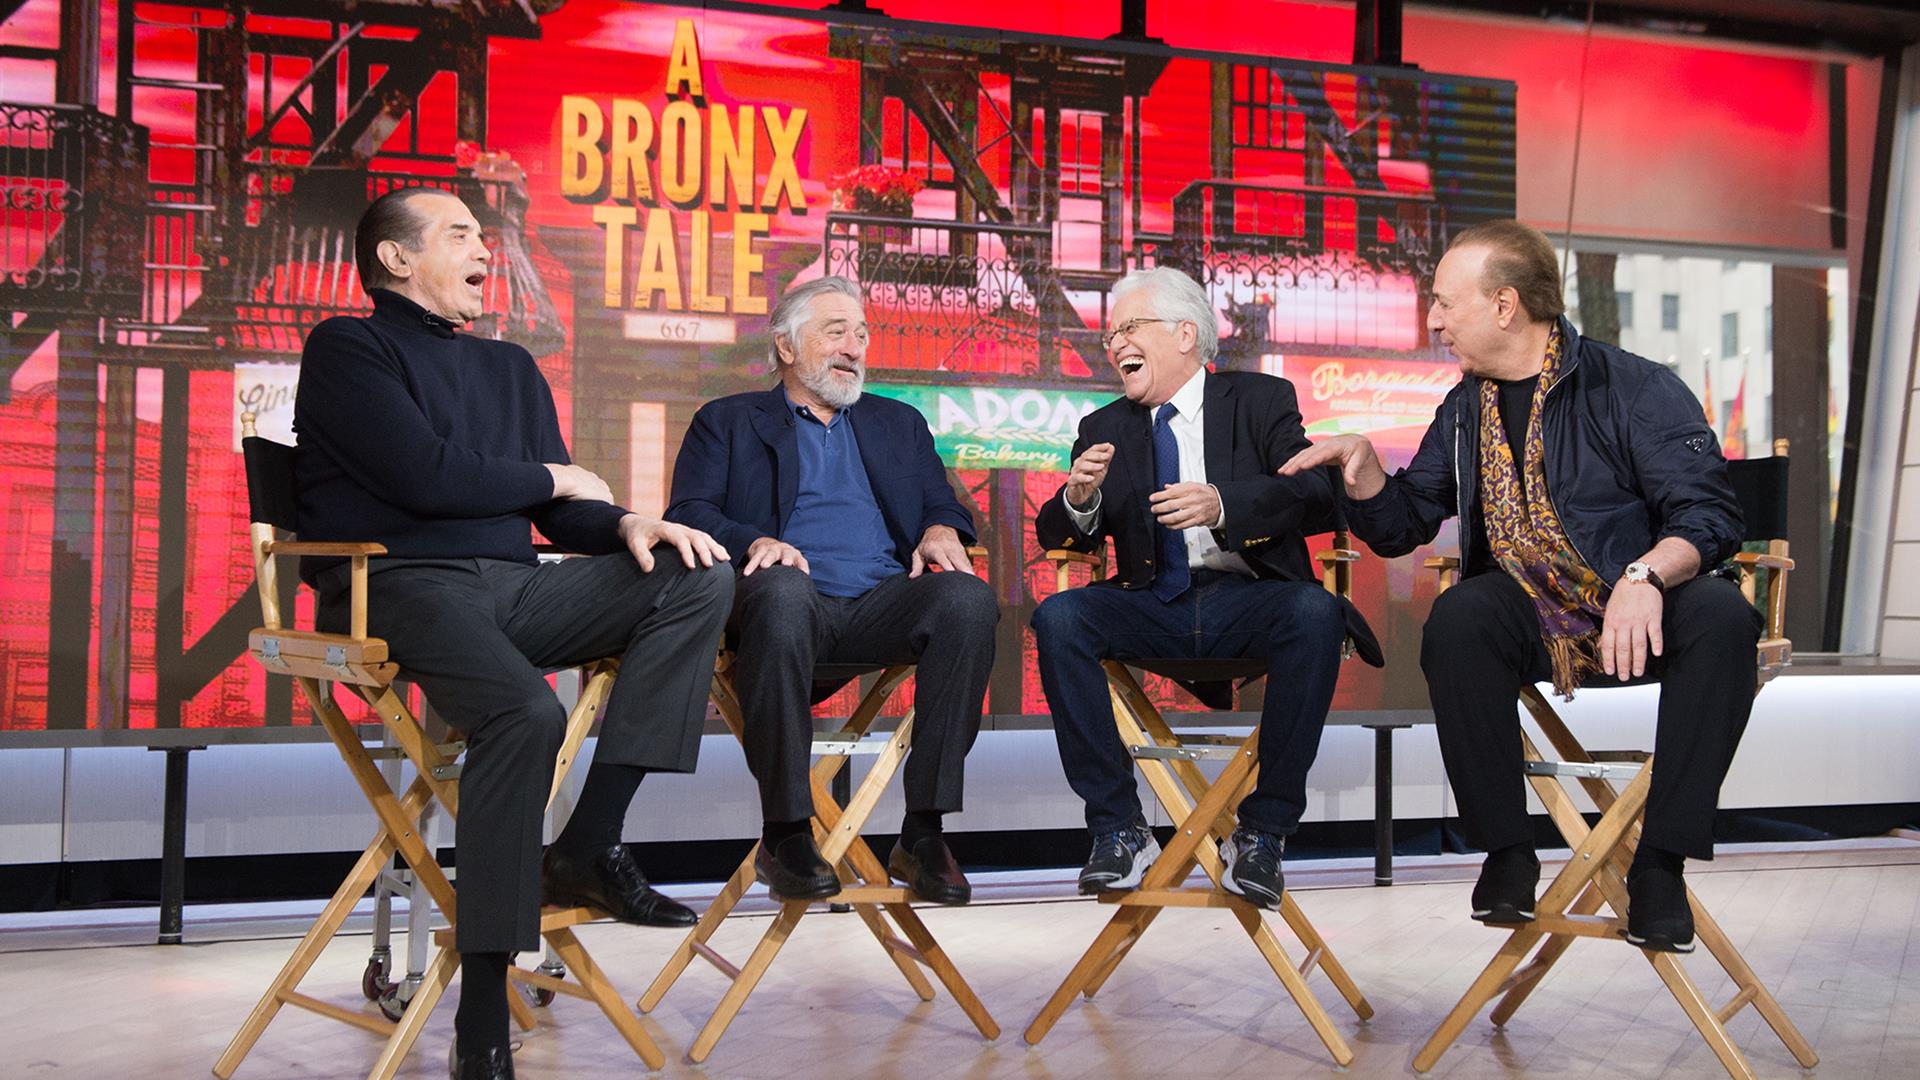 Robert De Niro, Chazz Palminteri talk about 'Bronx Tale' musical